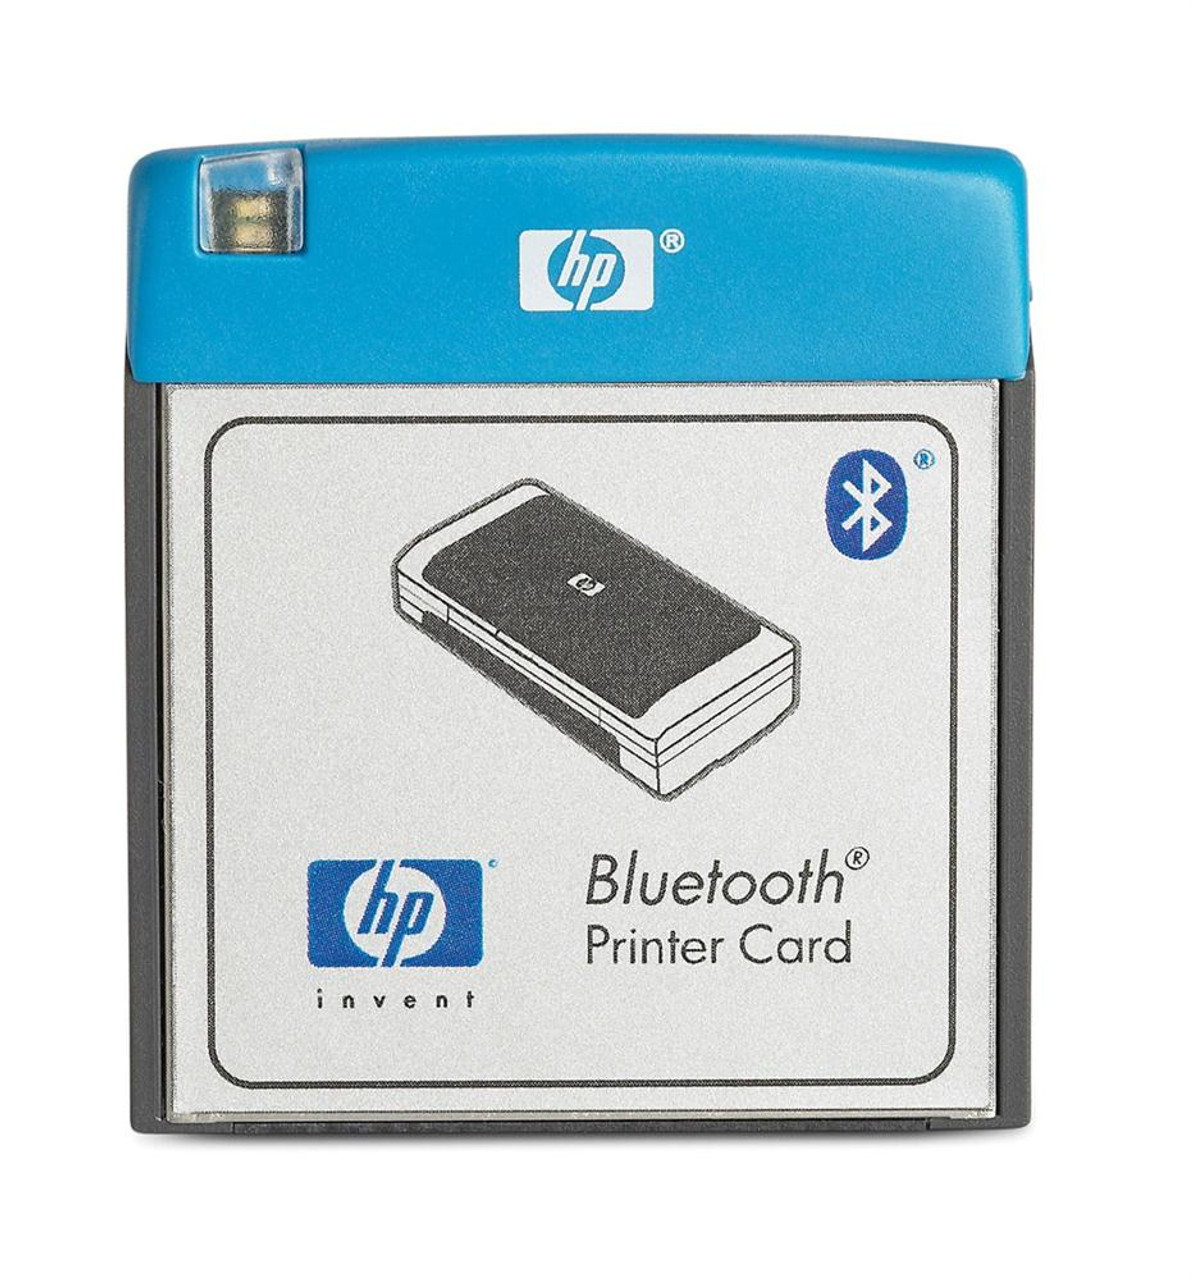 Termisk morgenmad kold CS8033 HP DeskJet 450 / 460 Bluetooth Printer Card (Refurbished)